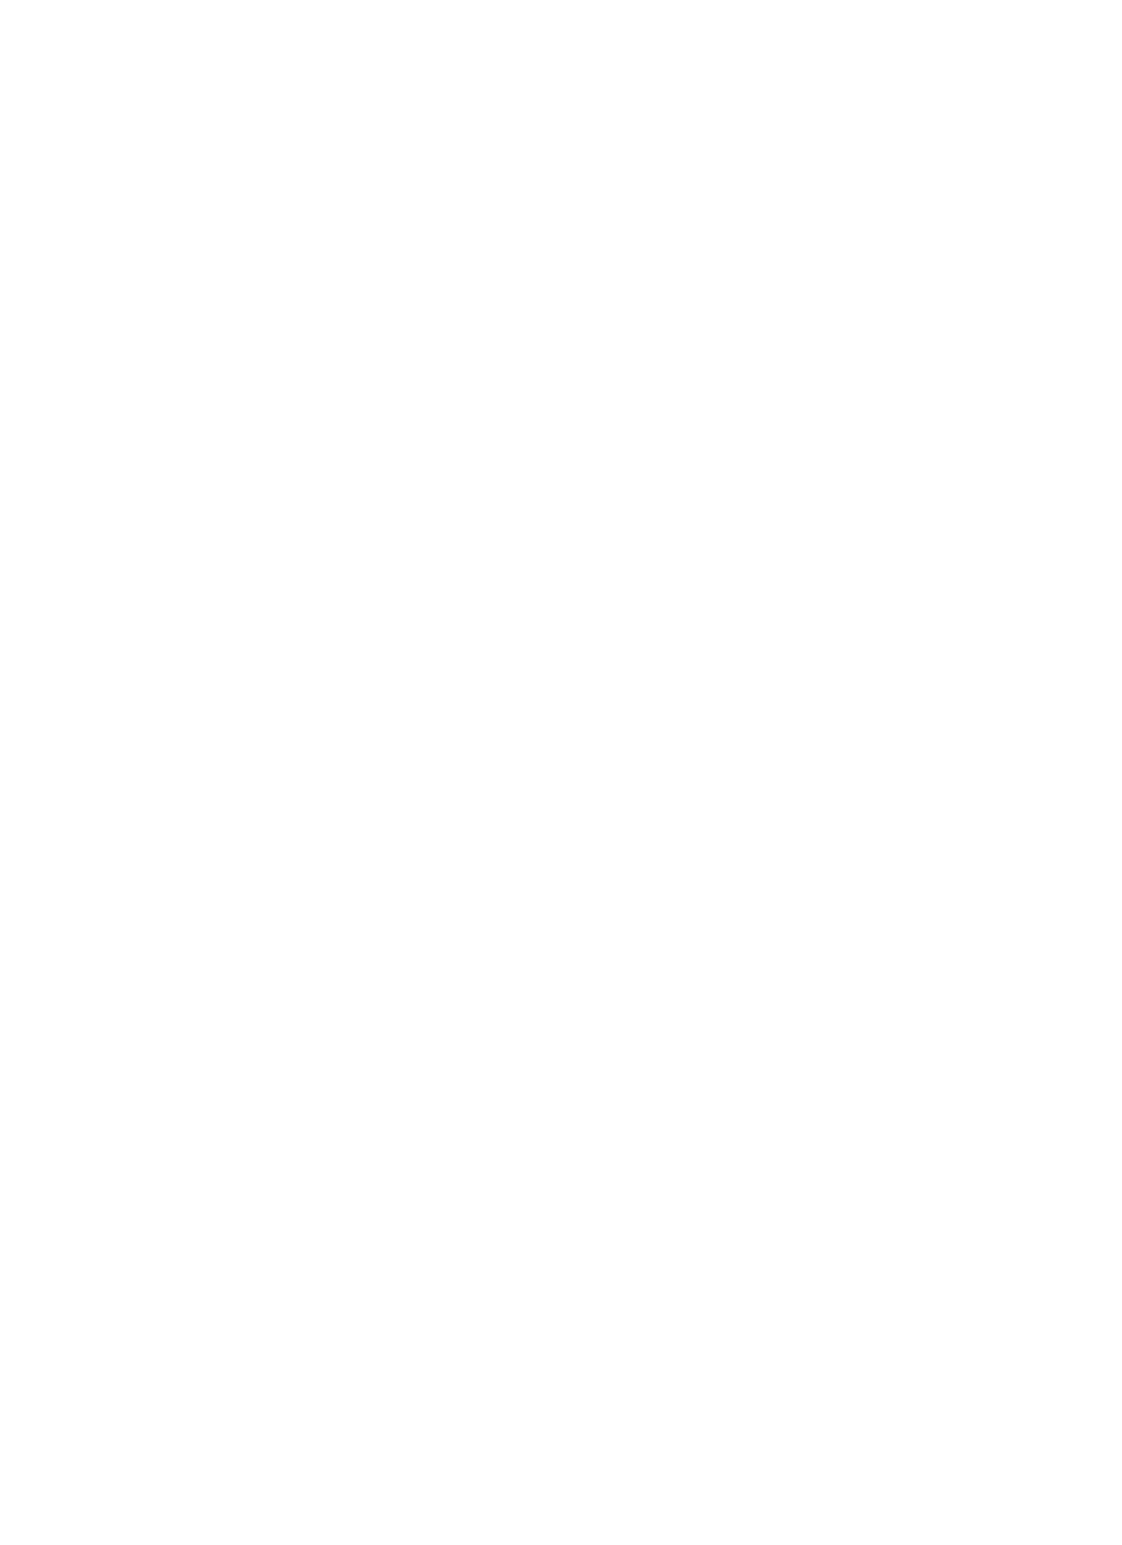 Sky Harbour Group logo for dark backgrounds (transparent PNG)